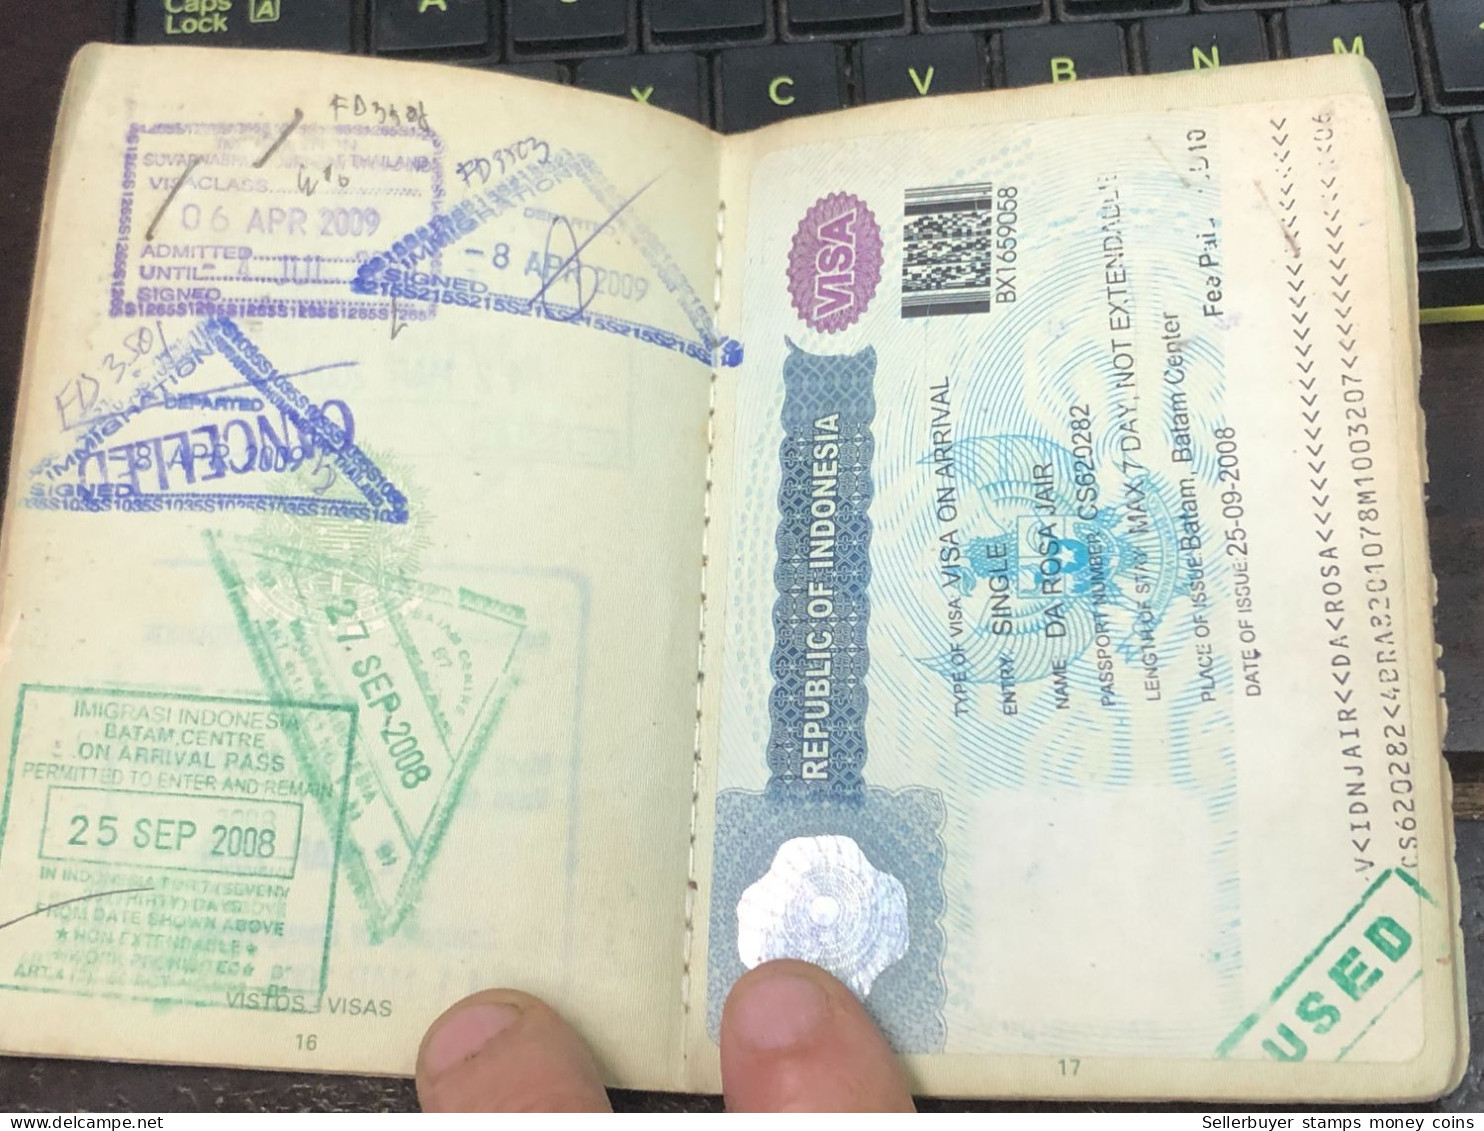 BRASIL-OLD-ID PASSPORT -PASSPORT Is Still Good-name-jair Da Rosa-2010-1pcs Book - Collections